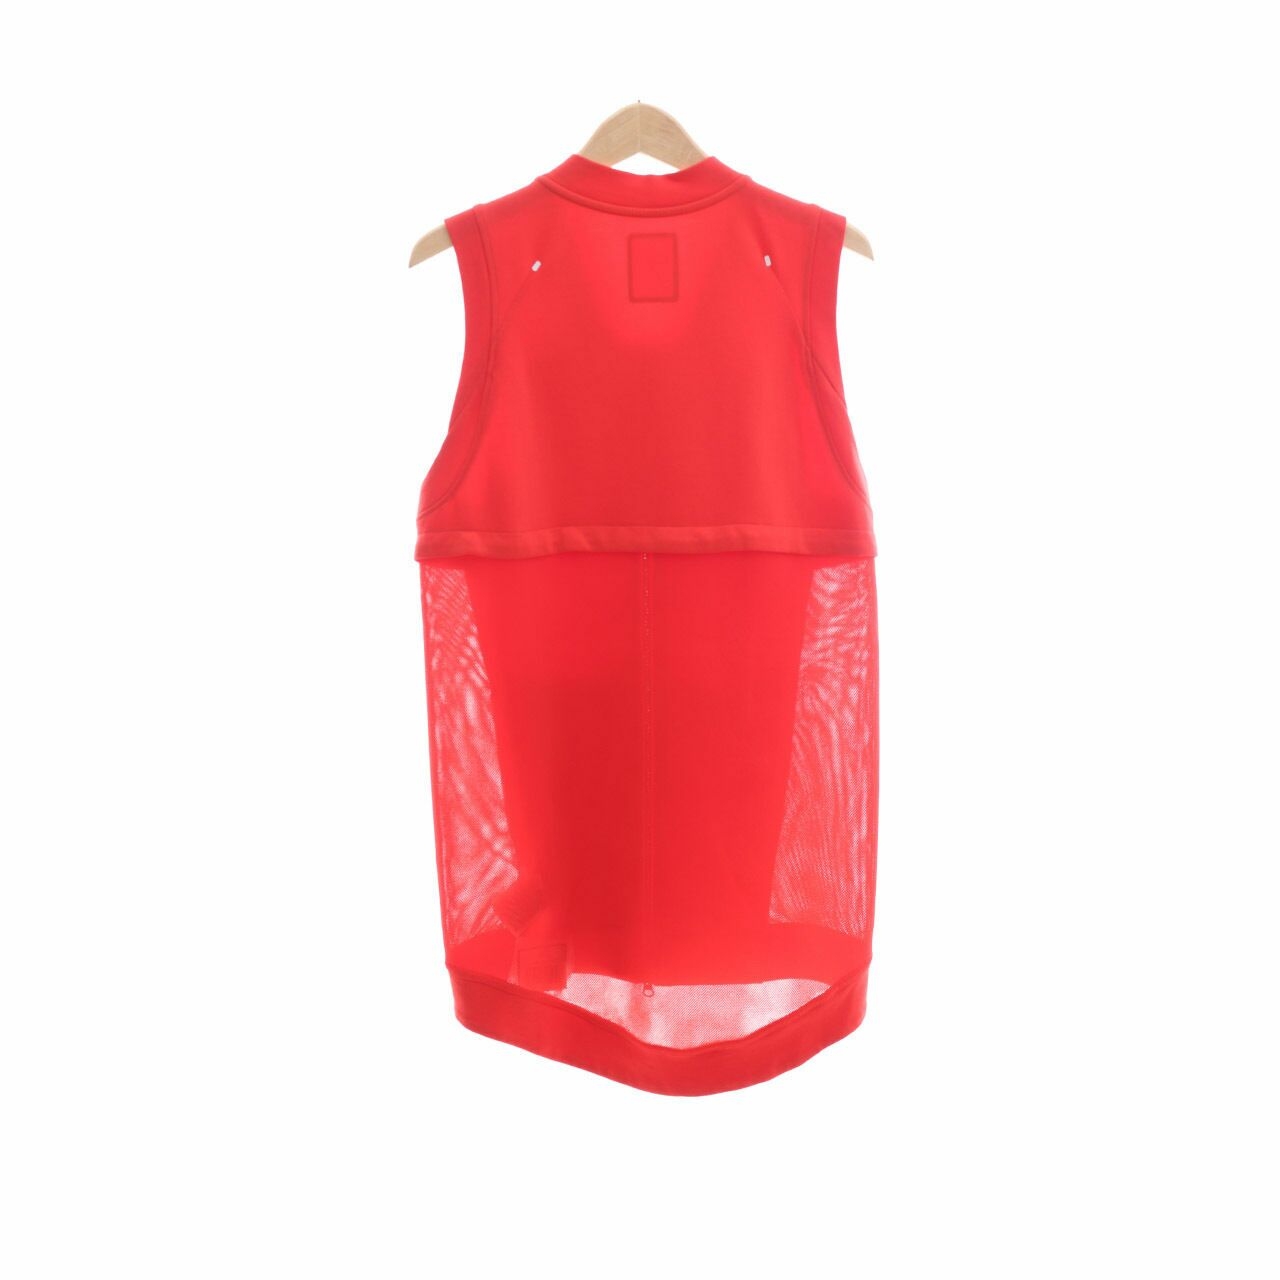 Nike Tech Fleece Cocoon Size Large Red Vest